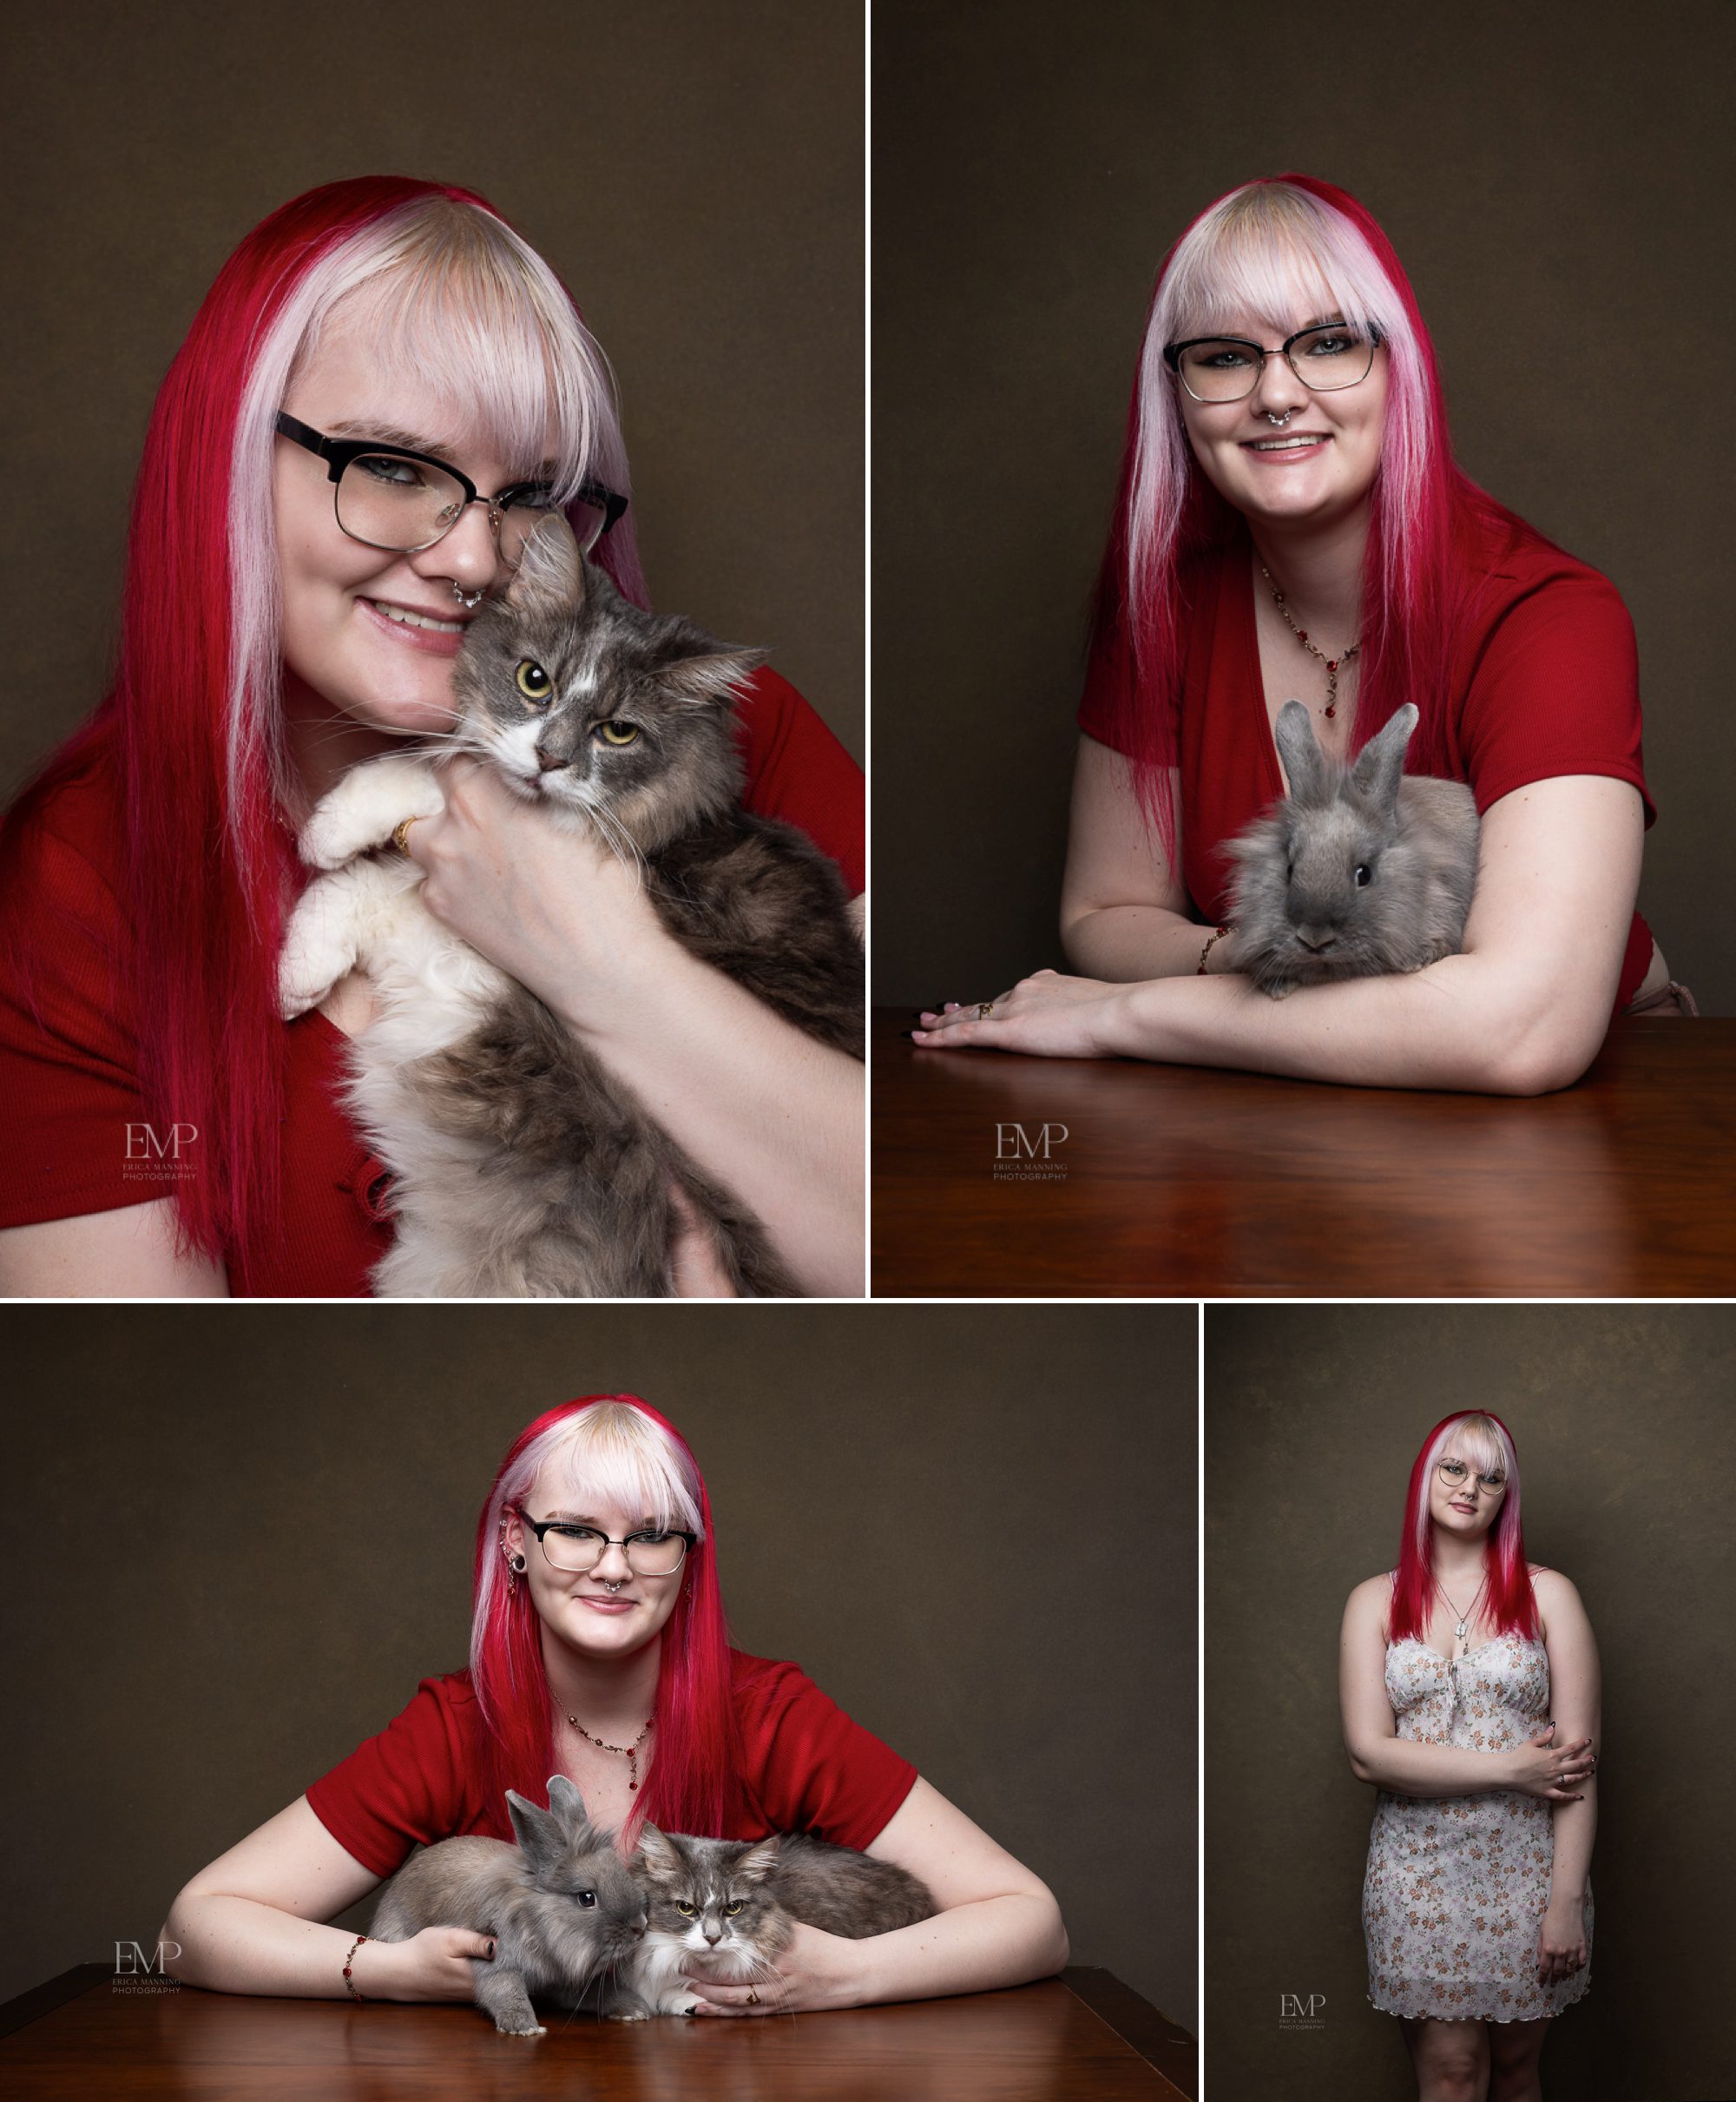 High school senior girl with pet cat and rabbit in studio portraits